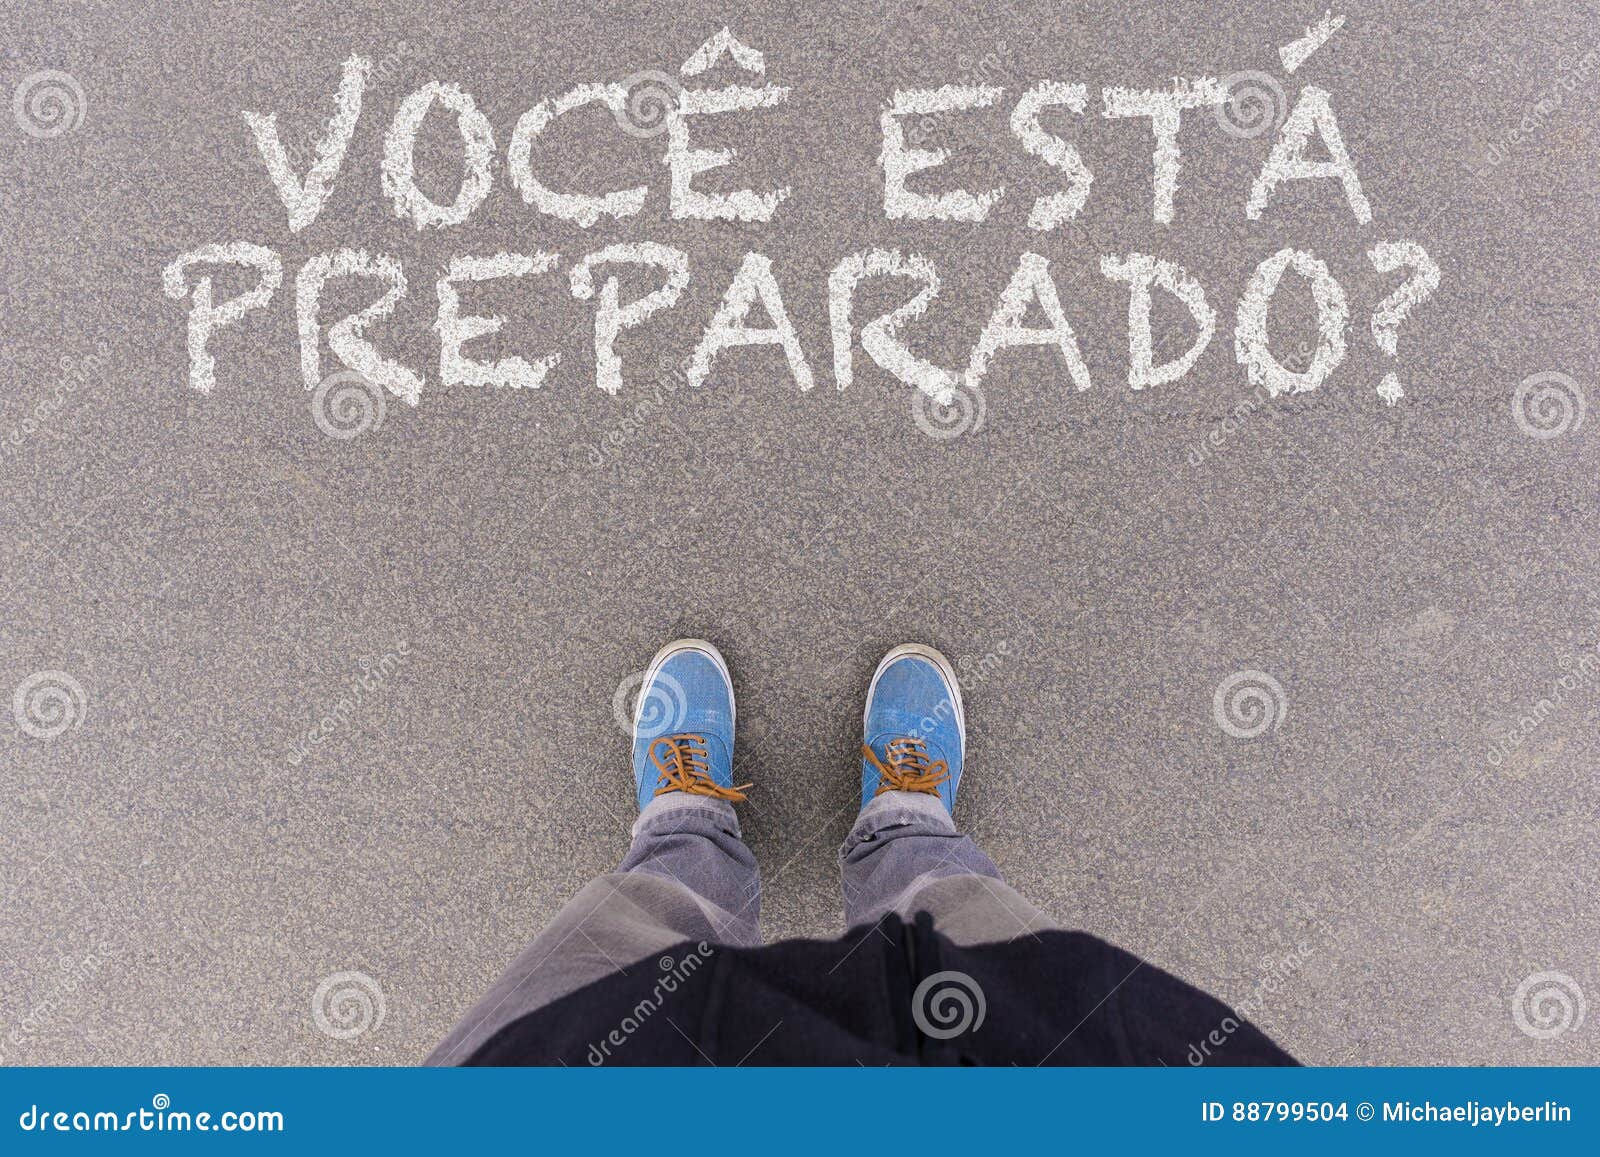 voce esta preparado?, portuguese text for are you ready? text